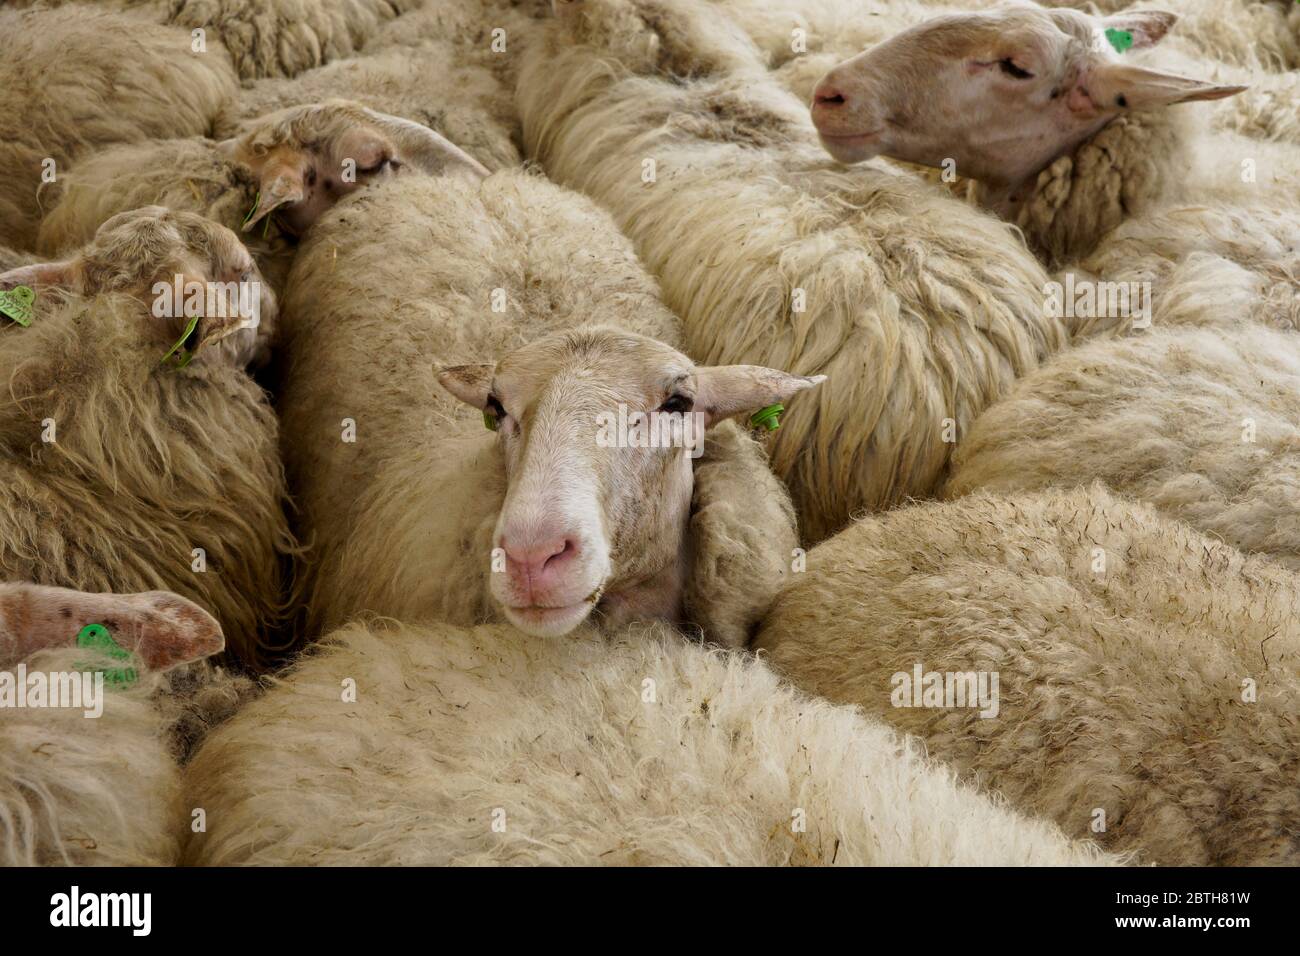 Sheep waiting to be sheared Stock Photo